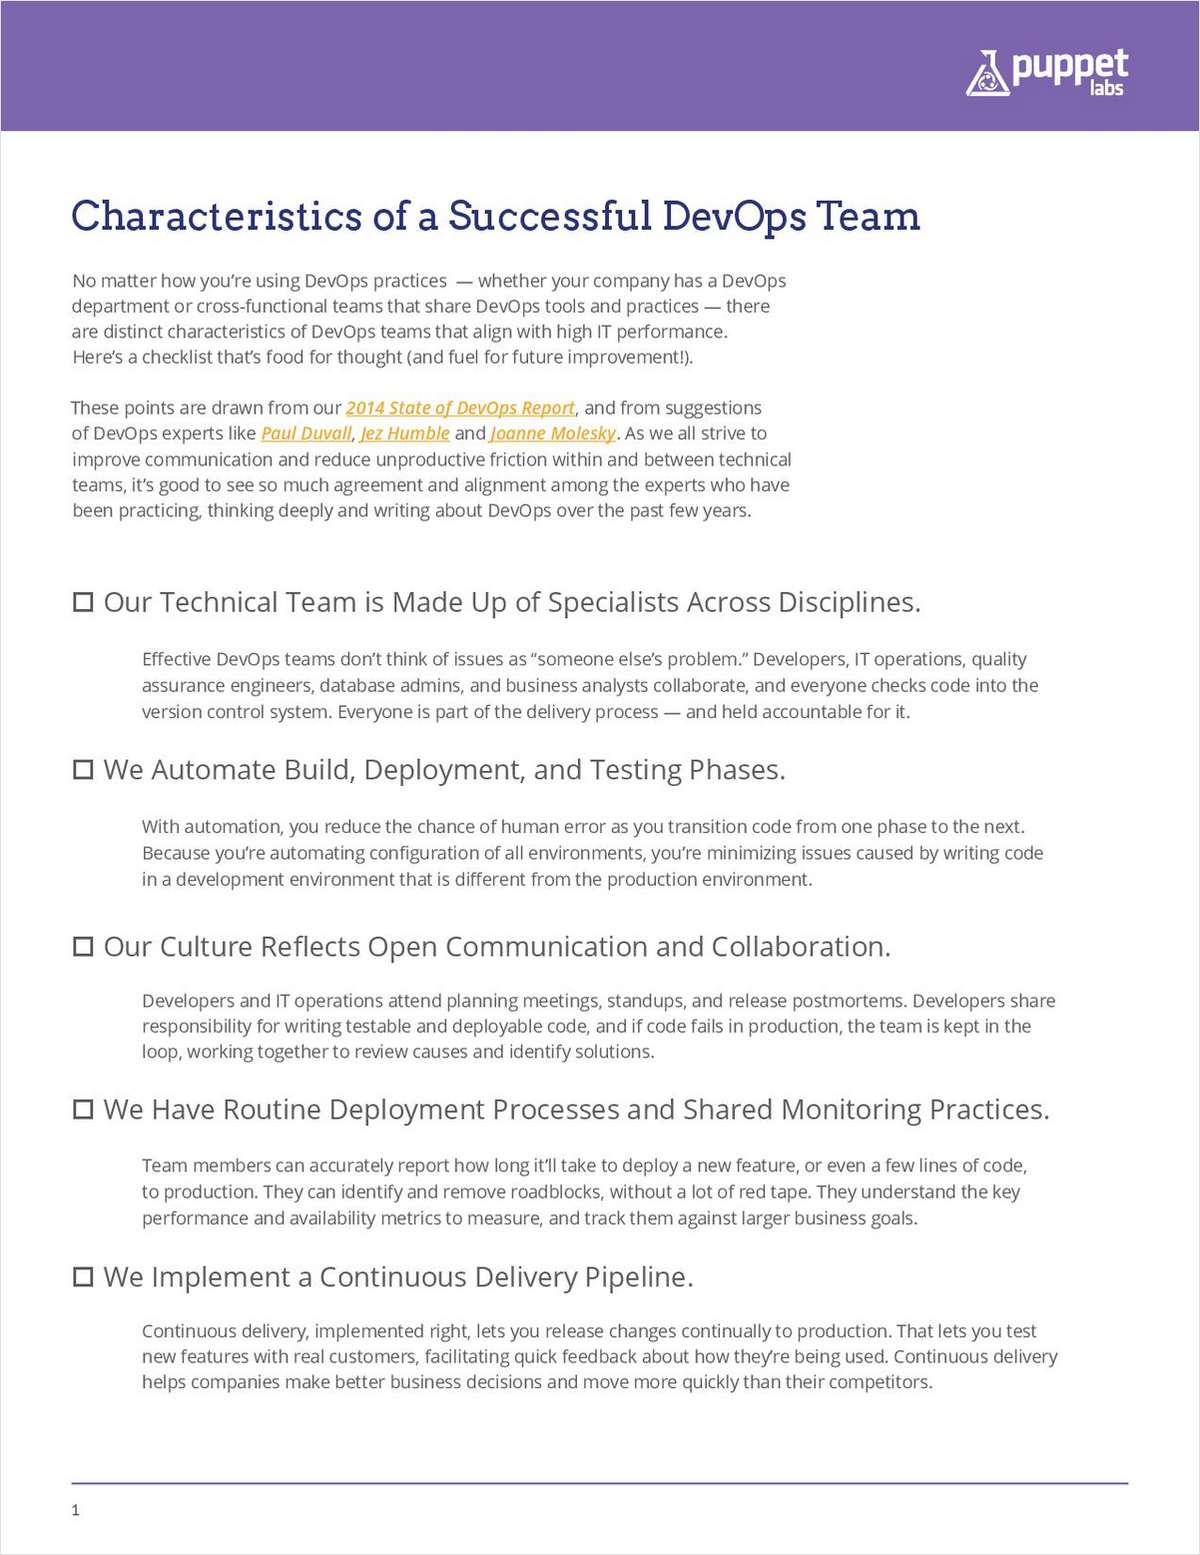 Characteristics of a Successful DevOps Team